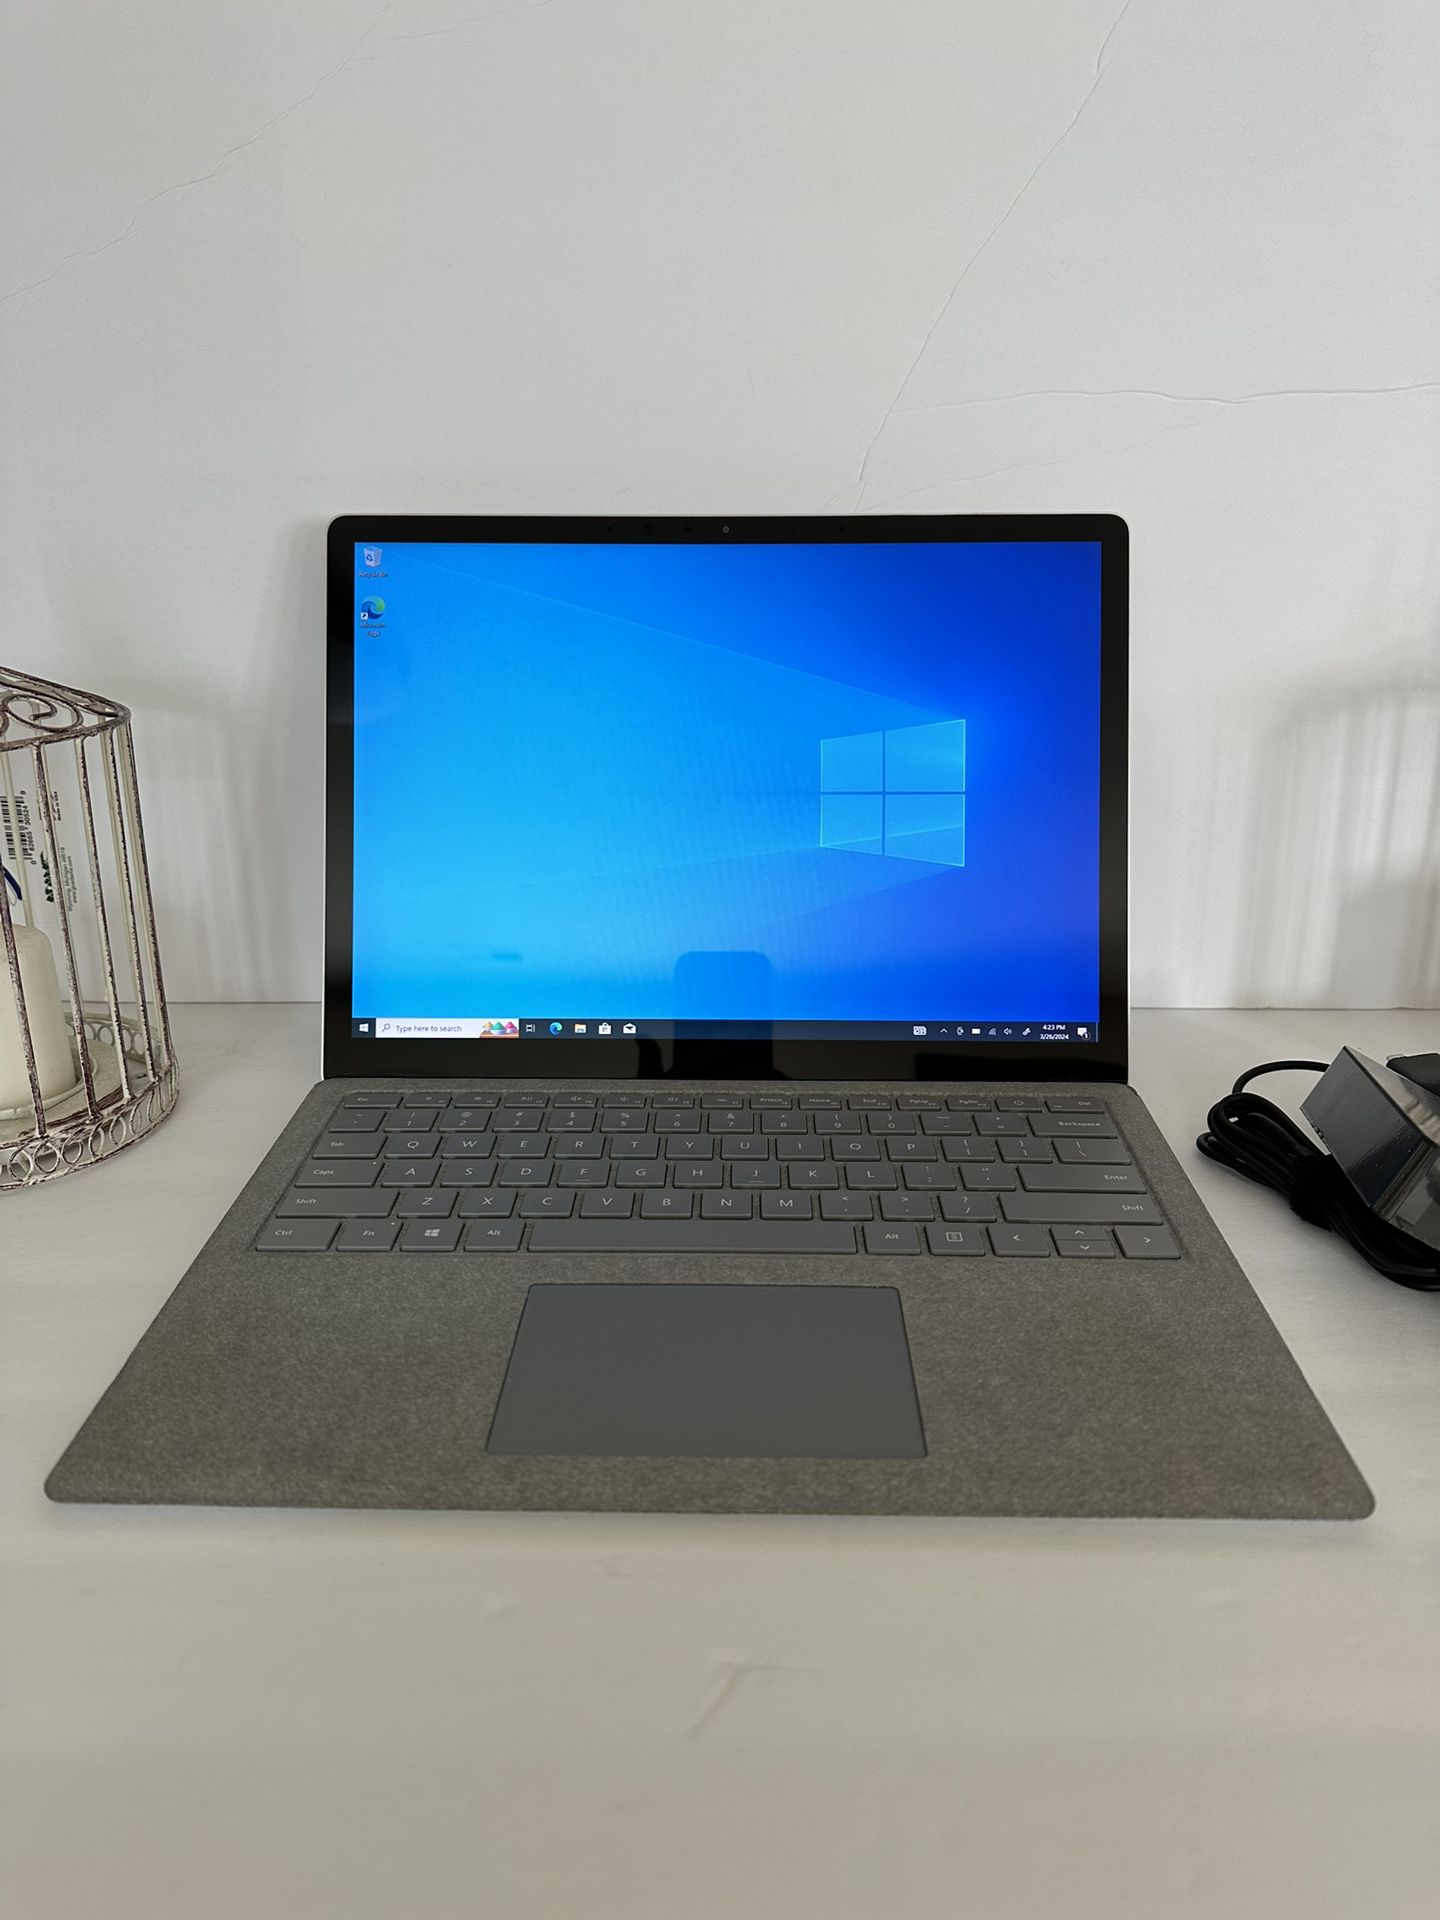 Microsoft Surface laptop model 1769-17 7th gen